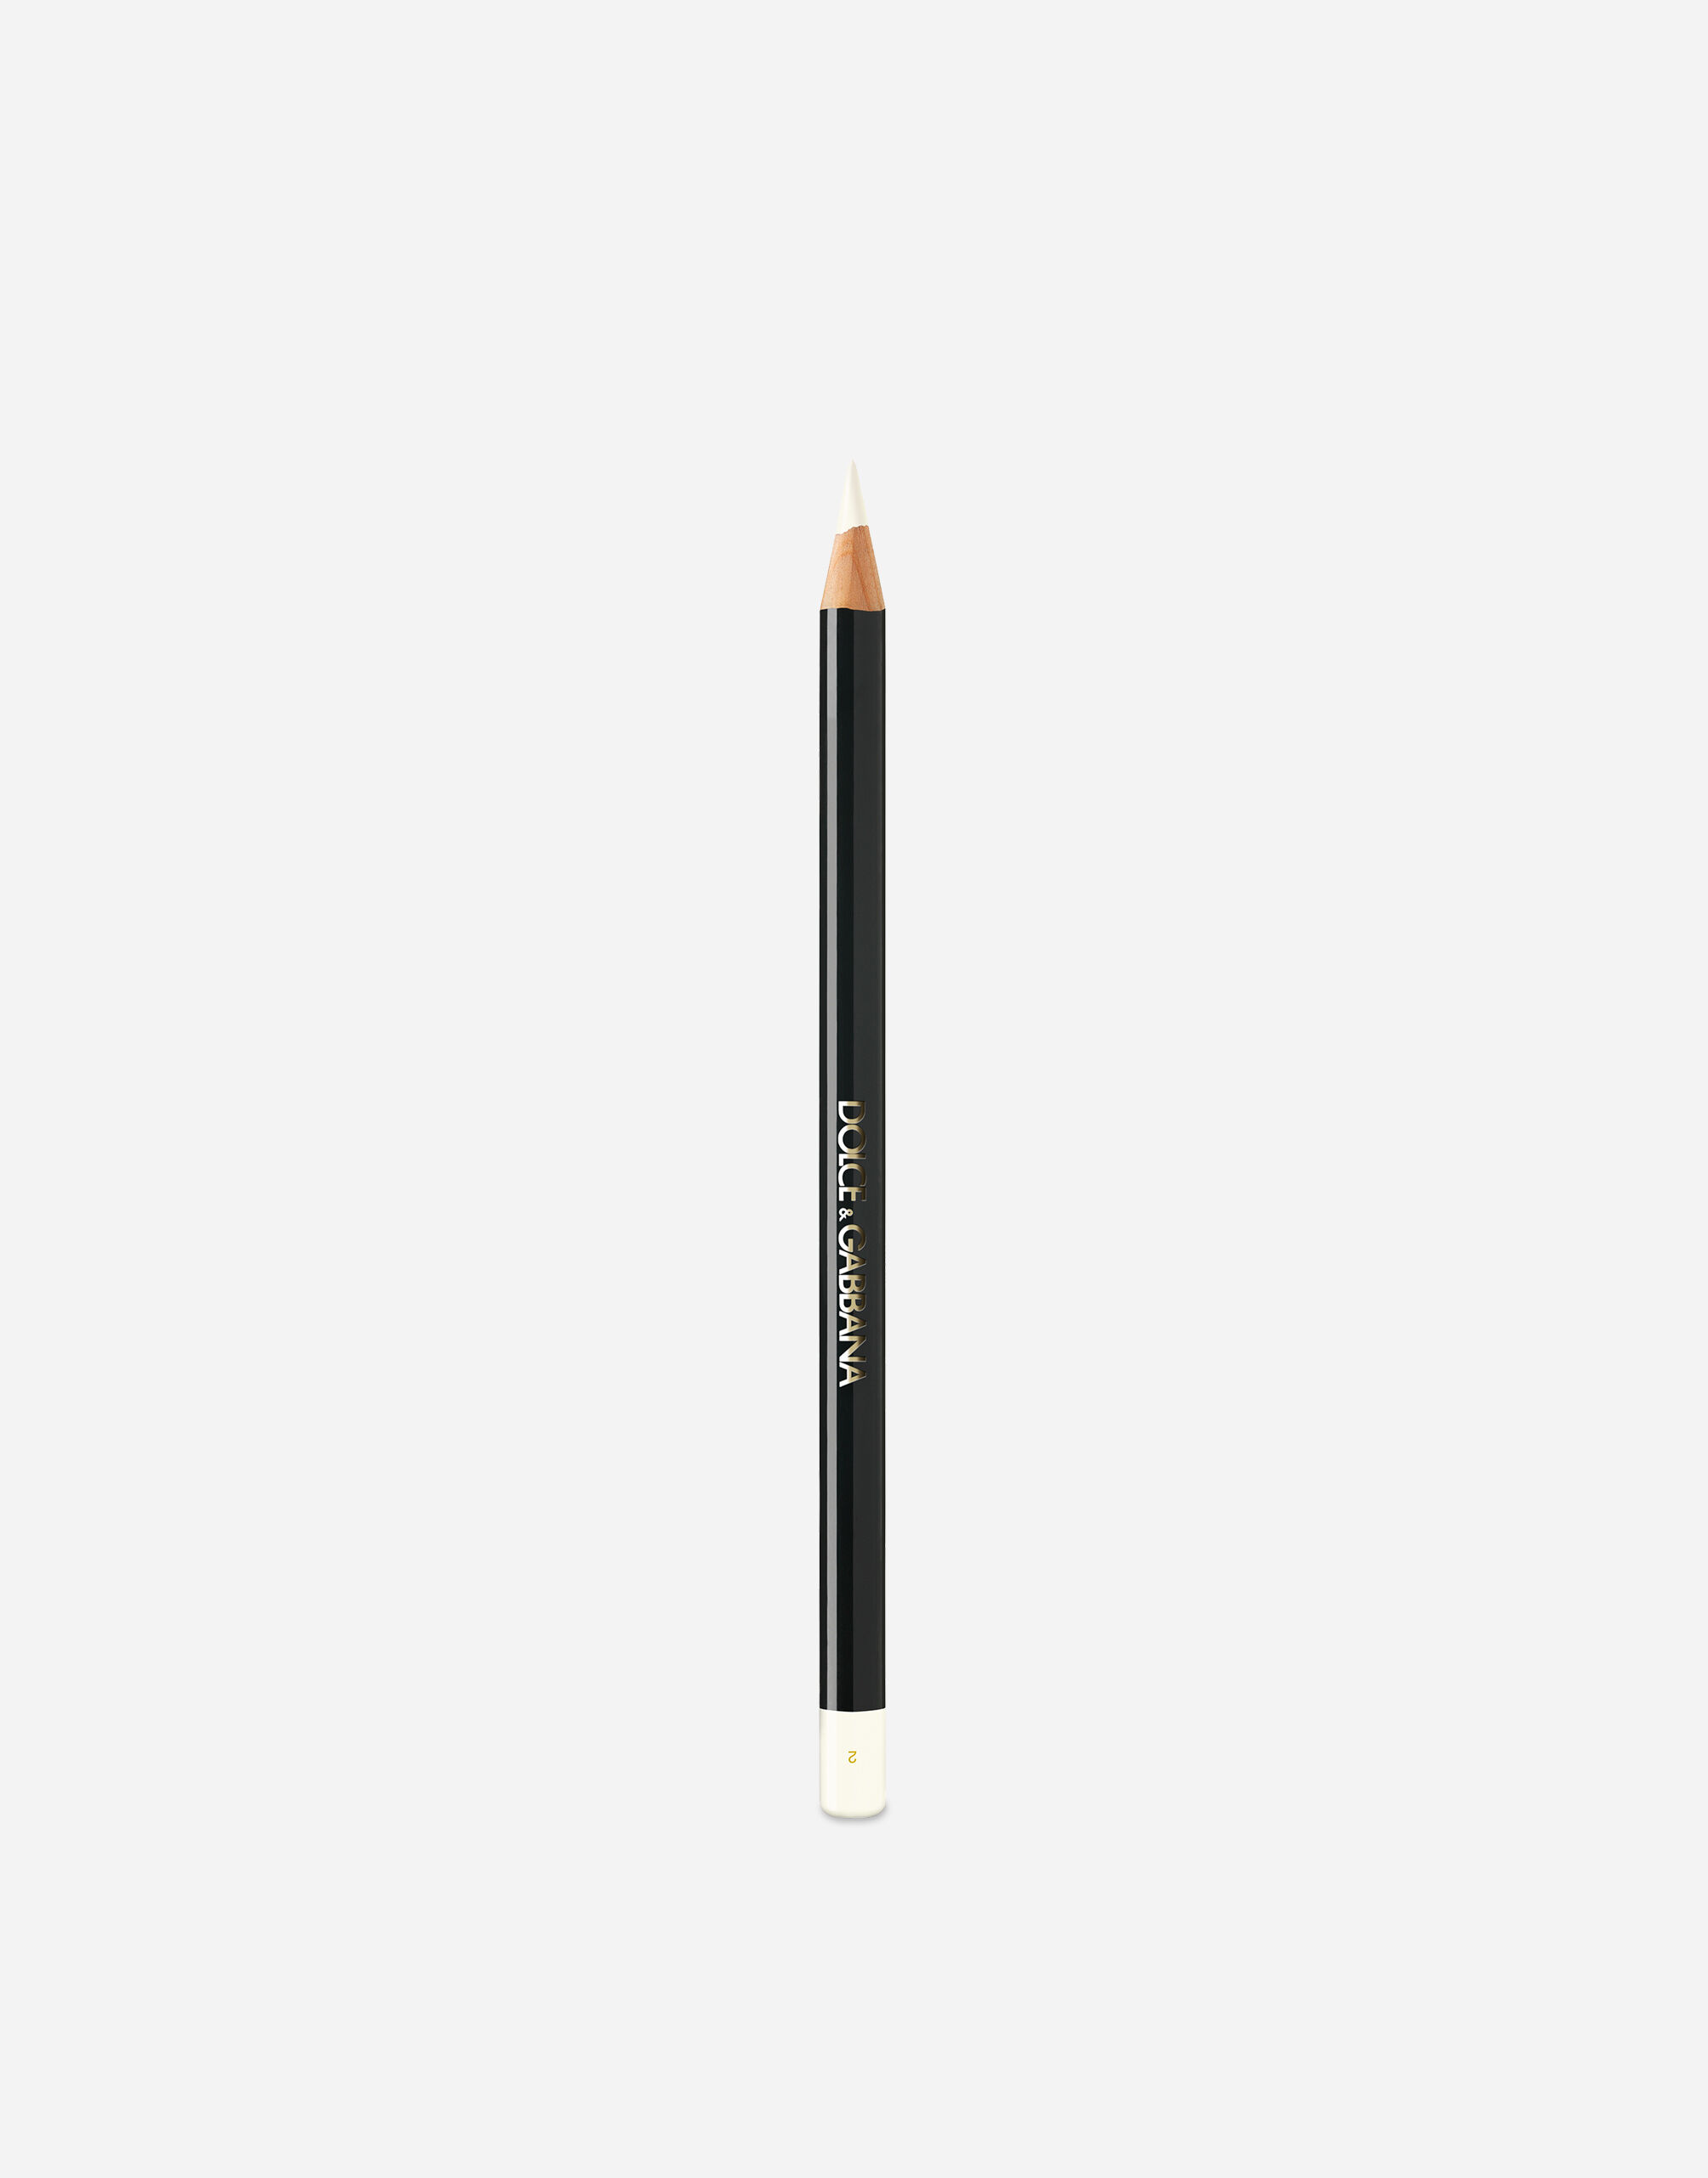 Карандаш-кайал для глаз DOLCE & GABBANA Khol Pencil стойкий, тон 2 True White, 2,04 г водостойкий карандаш для губ pupa it’s delicious vamp lip pencil 14 cherry